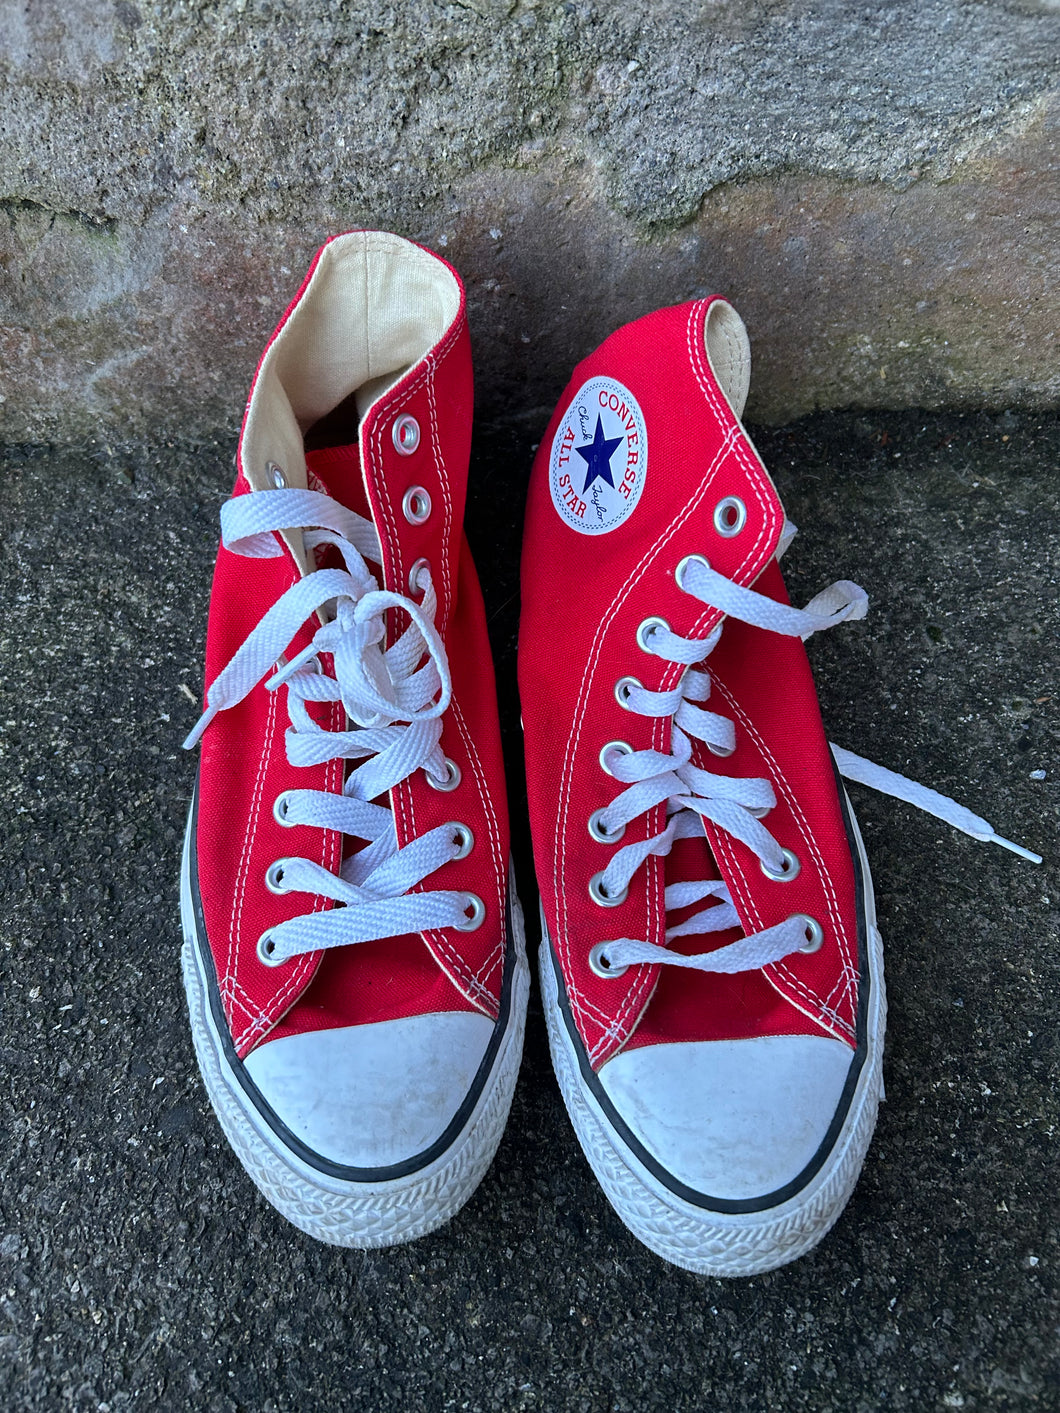 Red ankle high converse  uk 6.5 (eu 40)